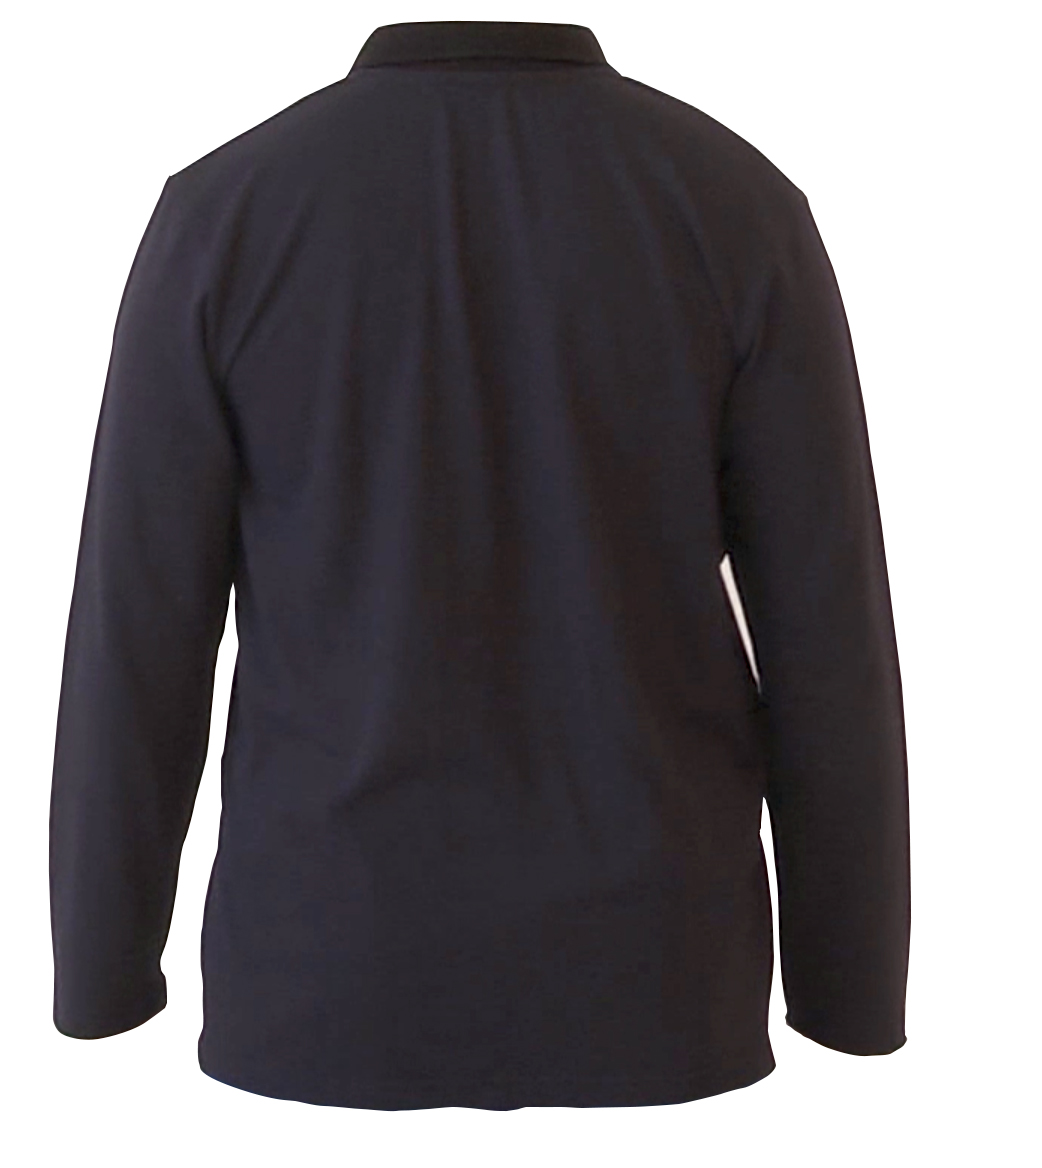 ESD Polo-Shirt Back AQGZ Style Black Unisex 3XL Antistatic Clothing ESD Garment - 473.AQGZ-APS21-BK3